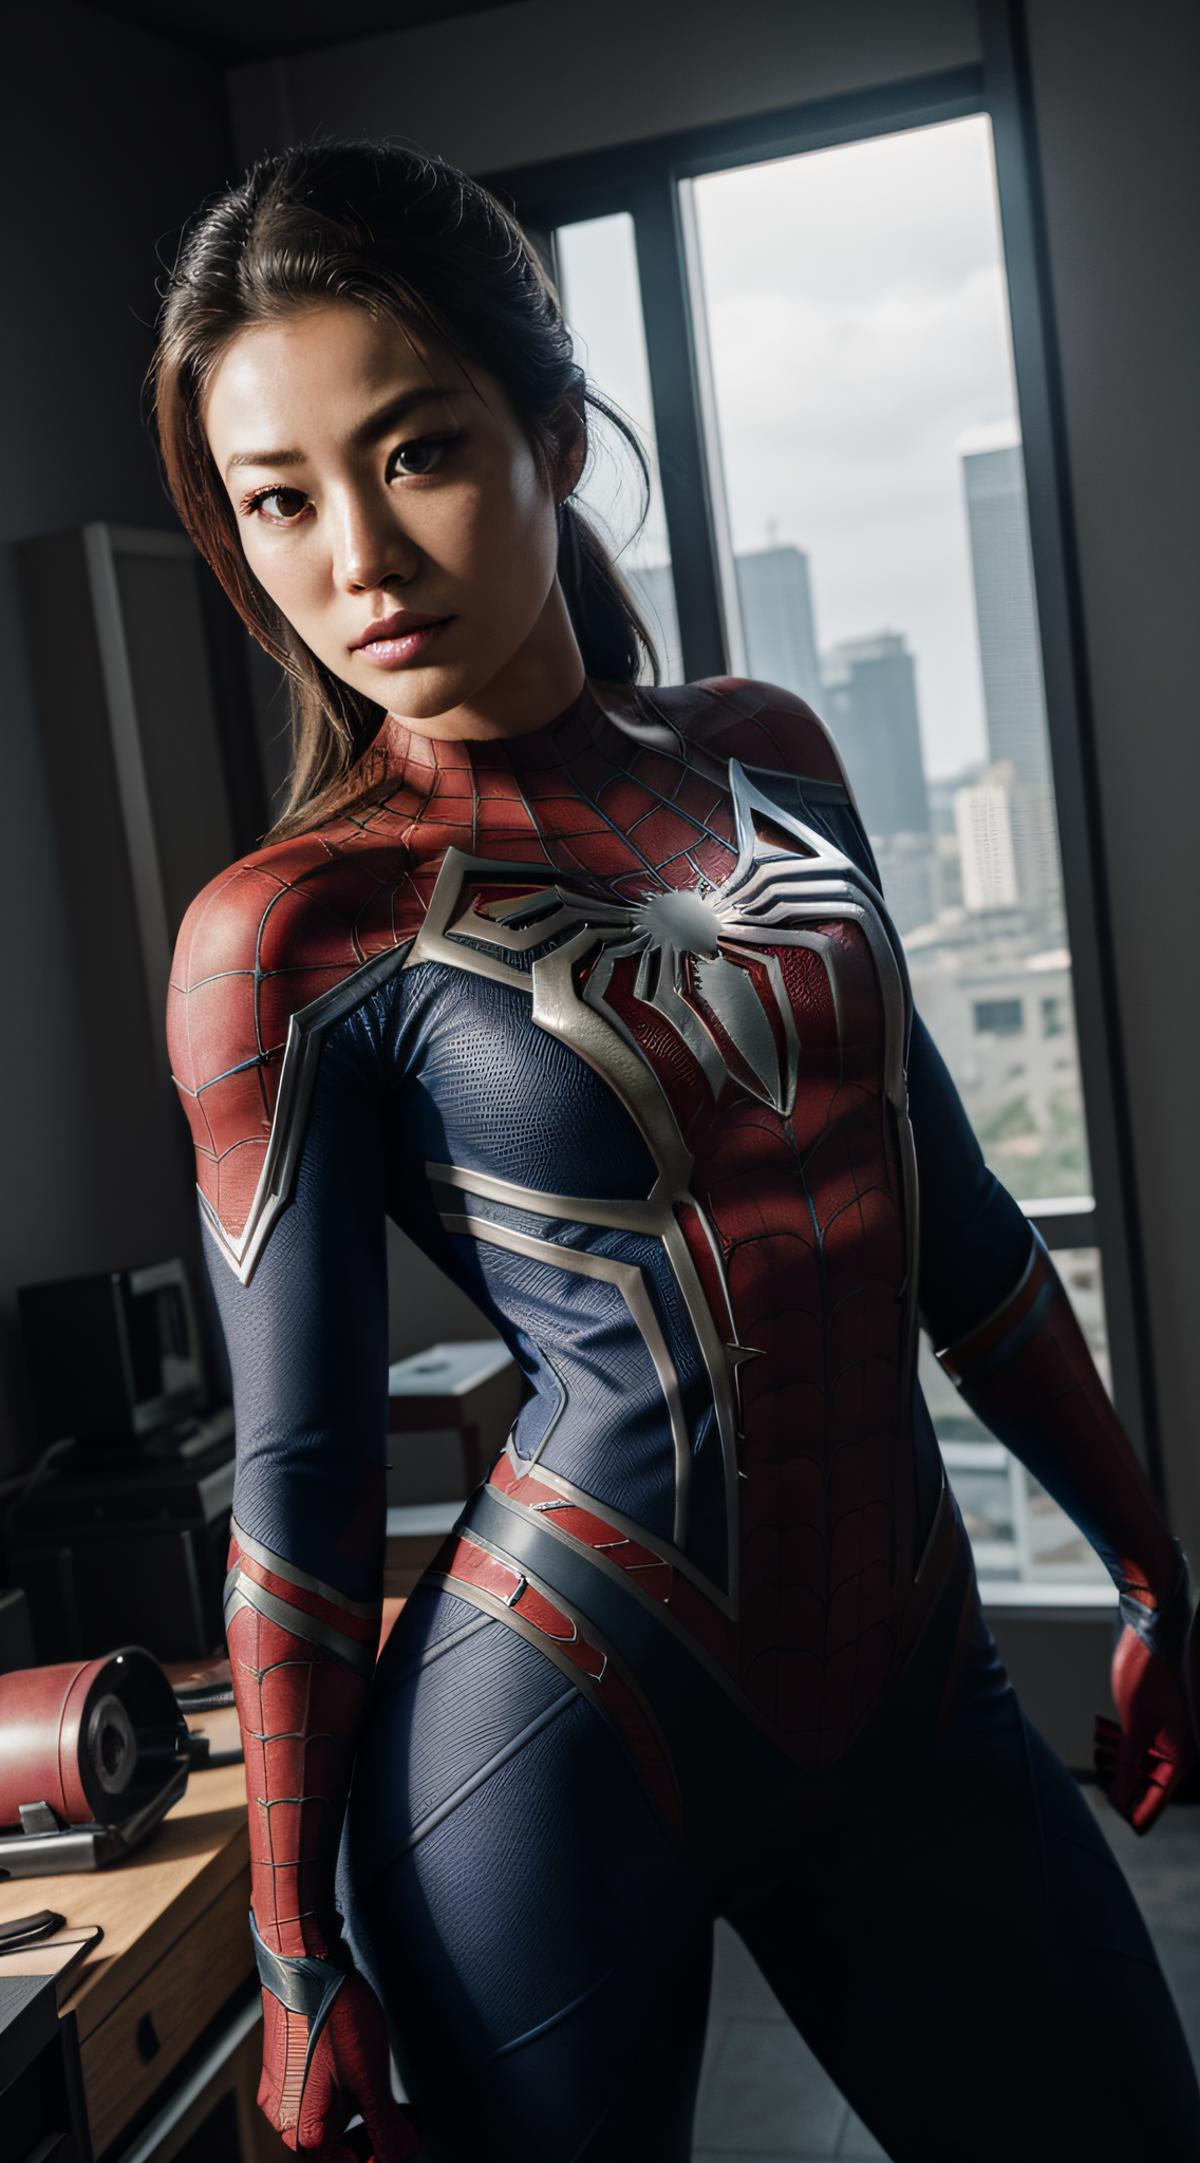 Spider Suit image by markplunder